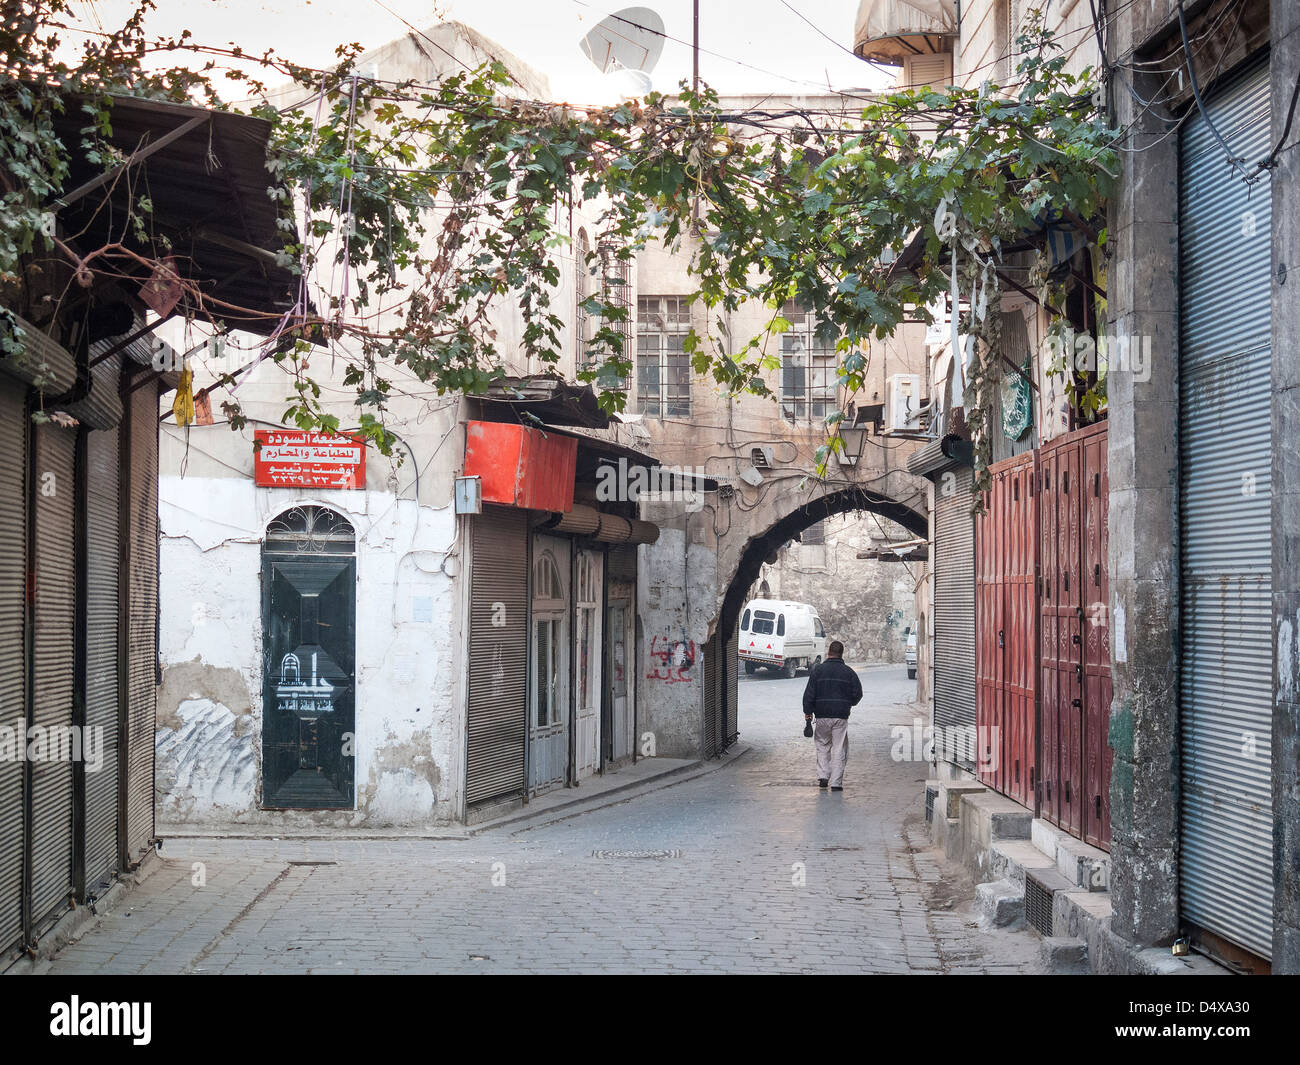 Altstadt in Damaskus Syrien Straße Stockfoto